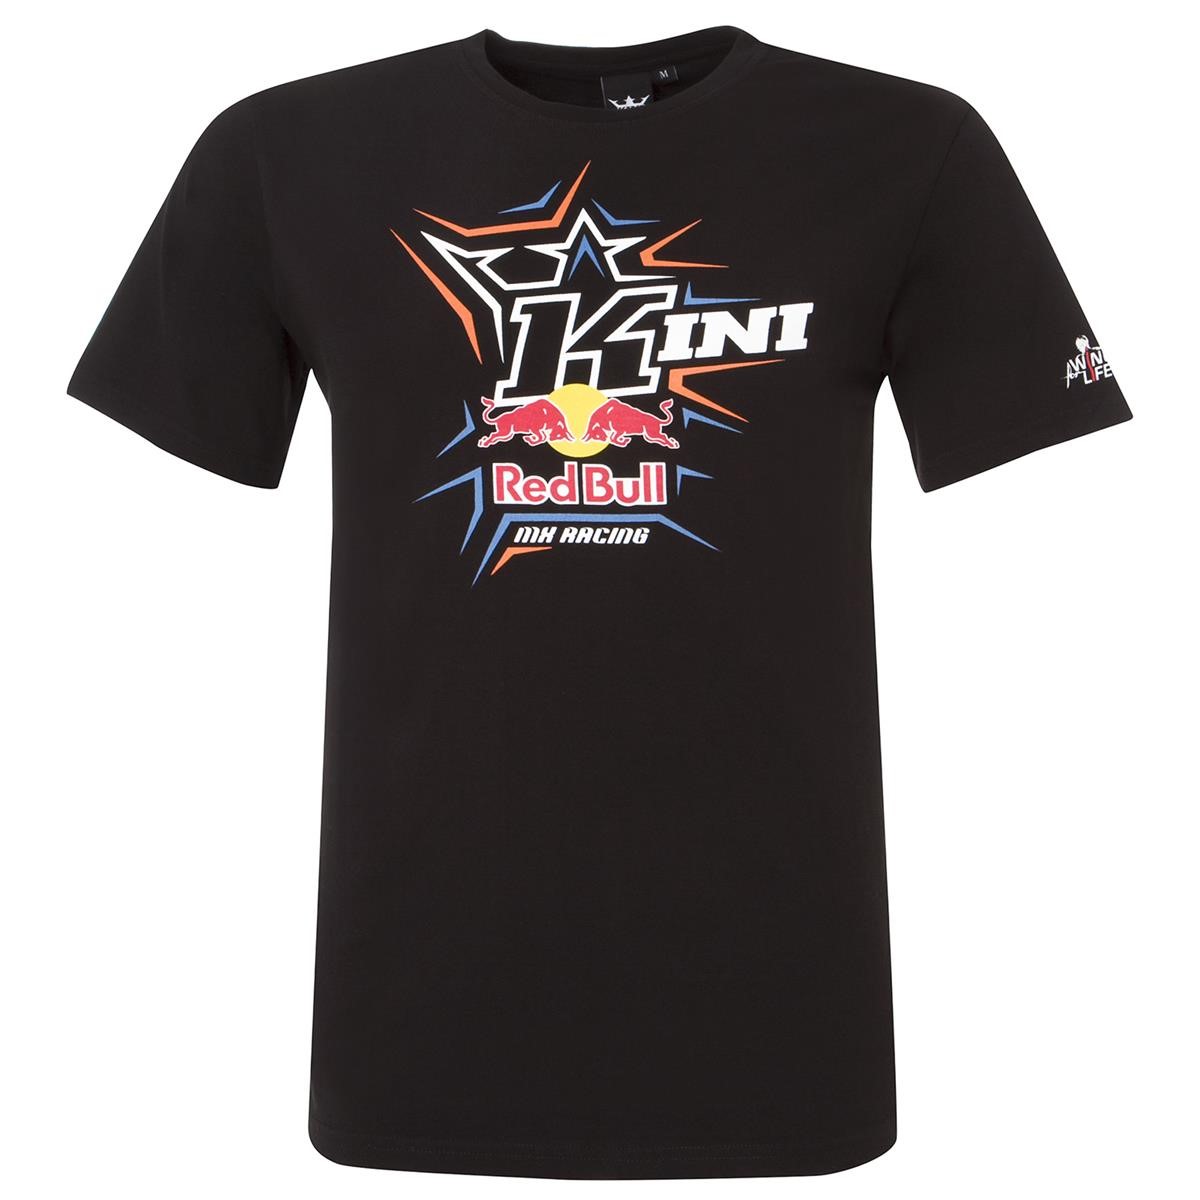 Kini Red Bull T-Shirt Spikes Schwarz